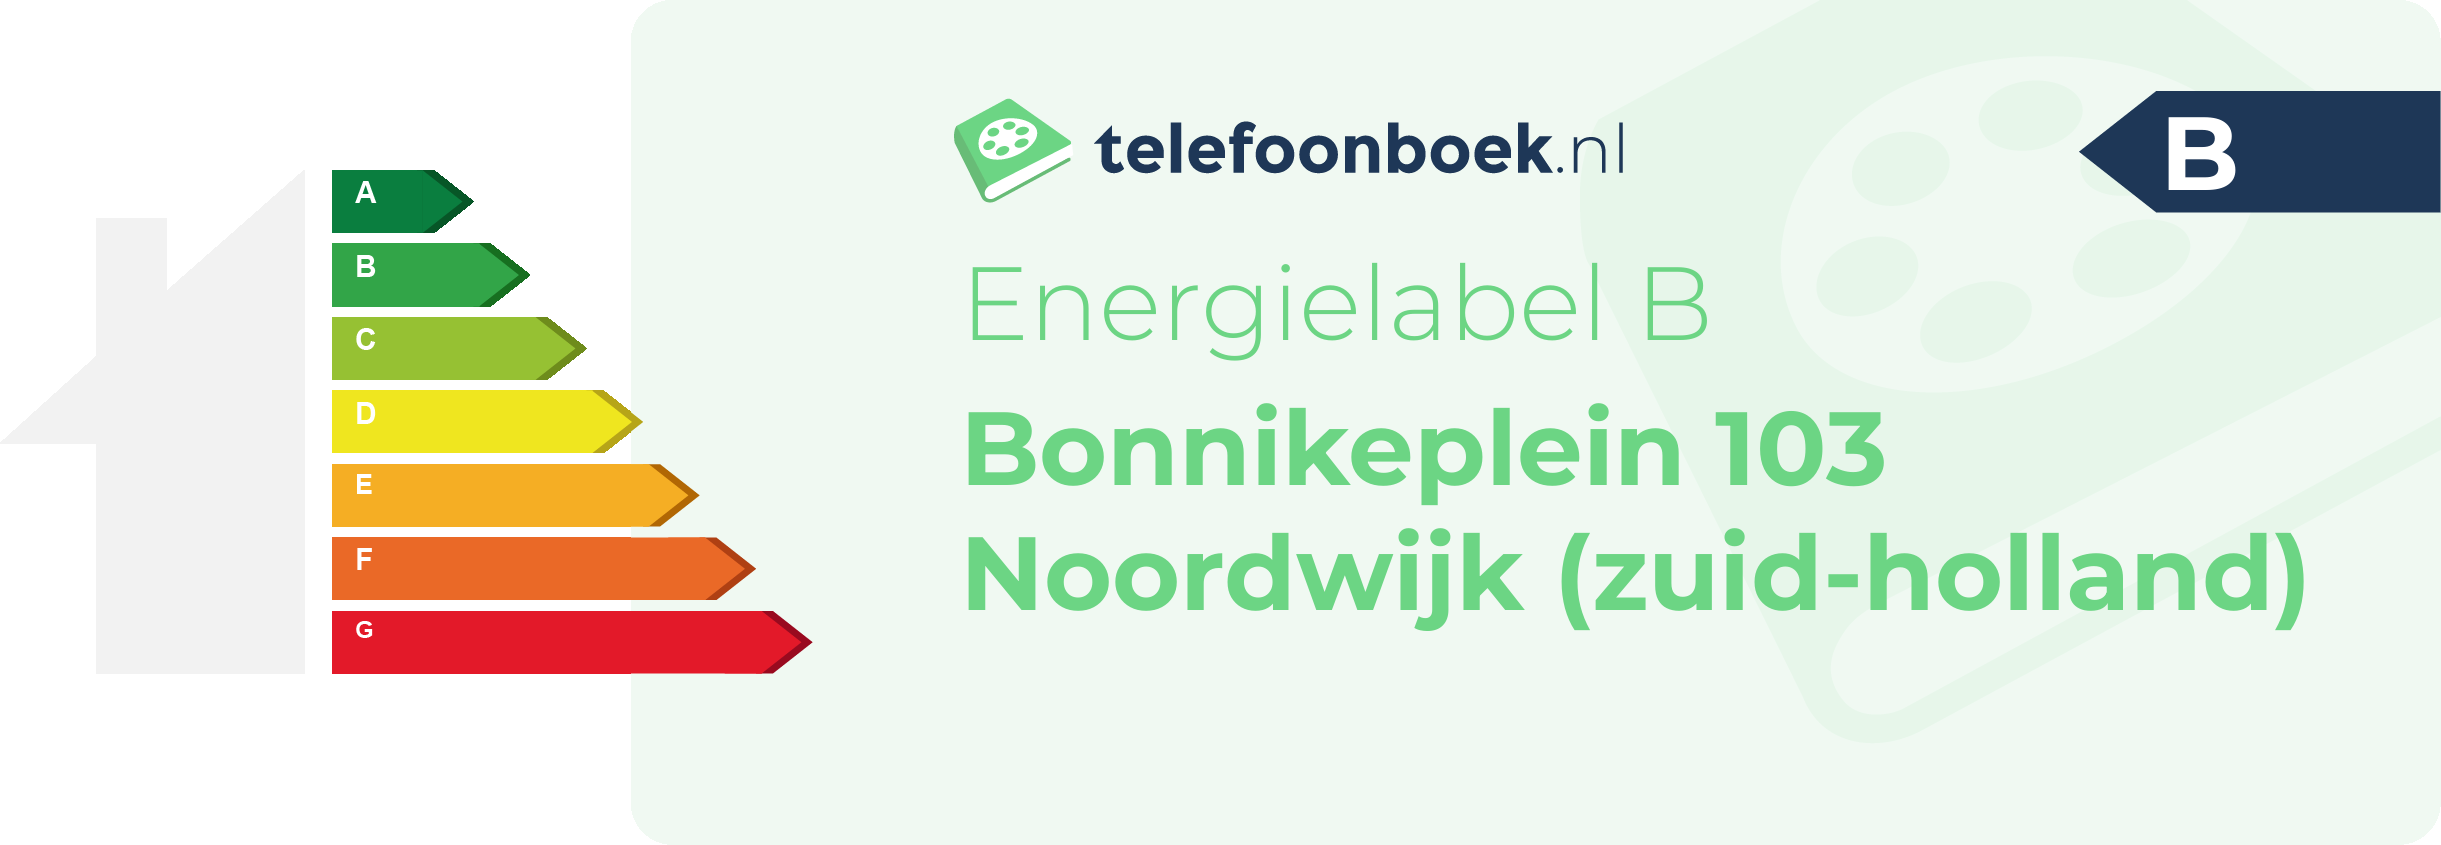 Energielabel Bonnikeplein 103 Noordwijk (Zuid-Holland)